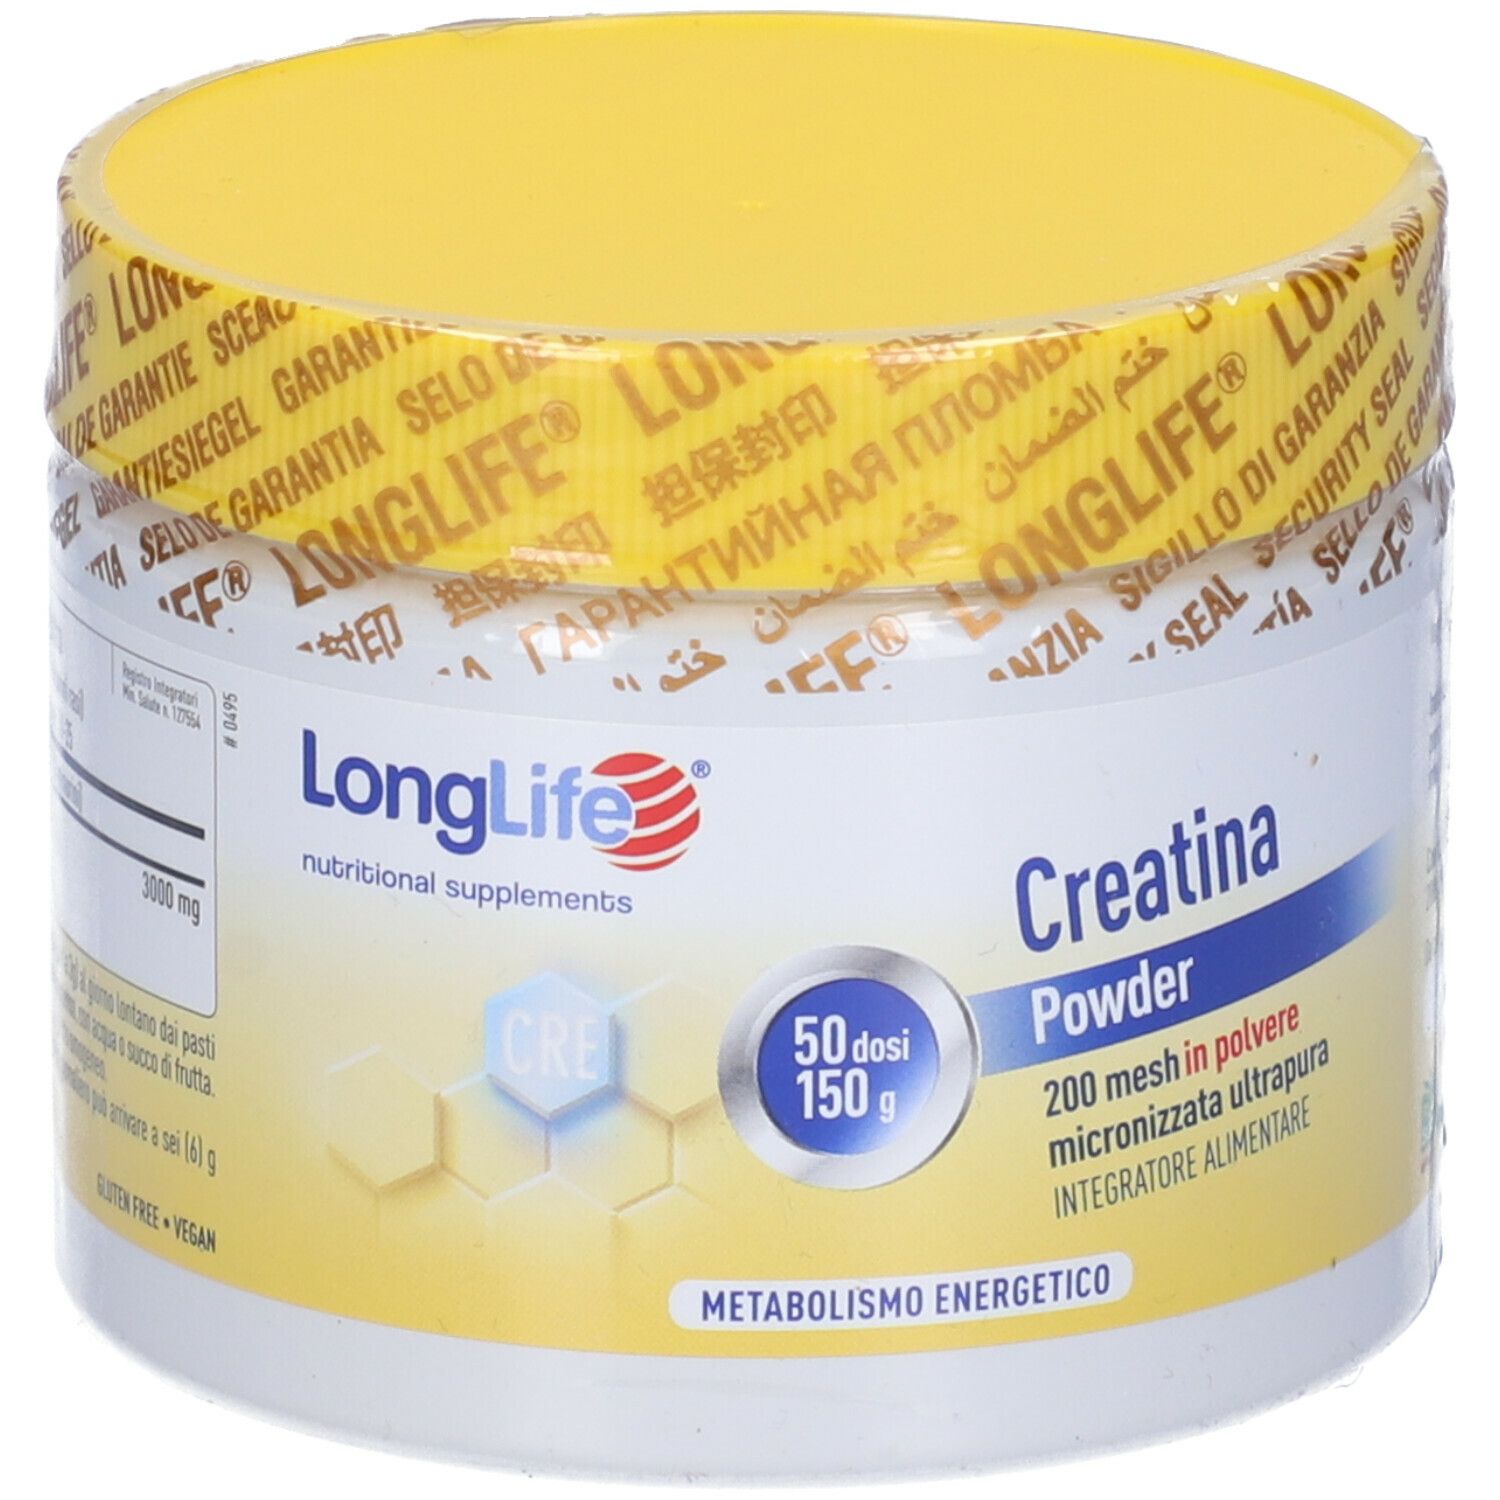 Image of LongLife® Creatina Powder